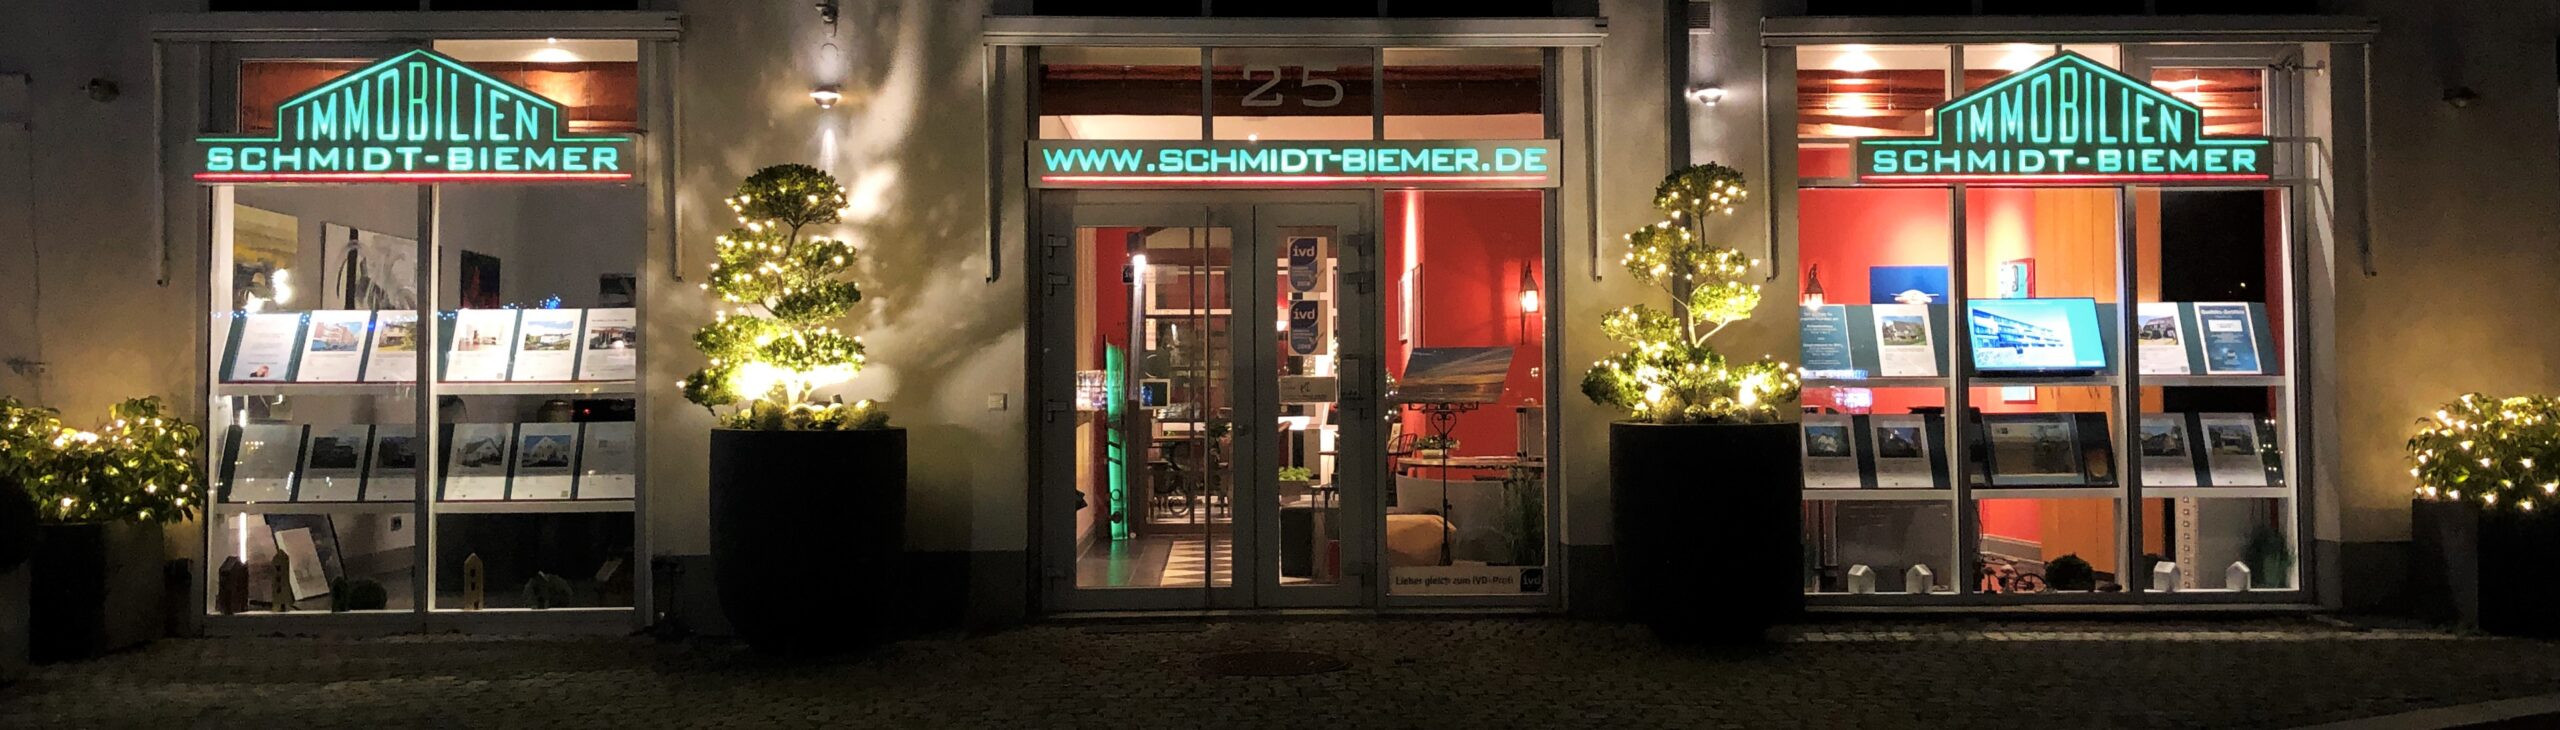 Frohe Weihanchten wünscht das Team von Schmidt-Biemer Immobilien